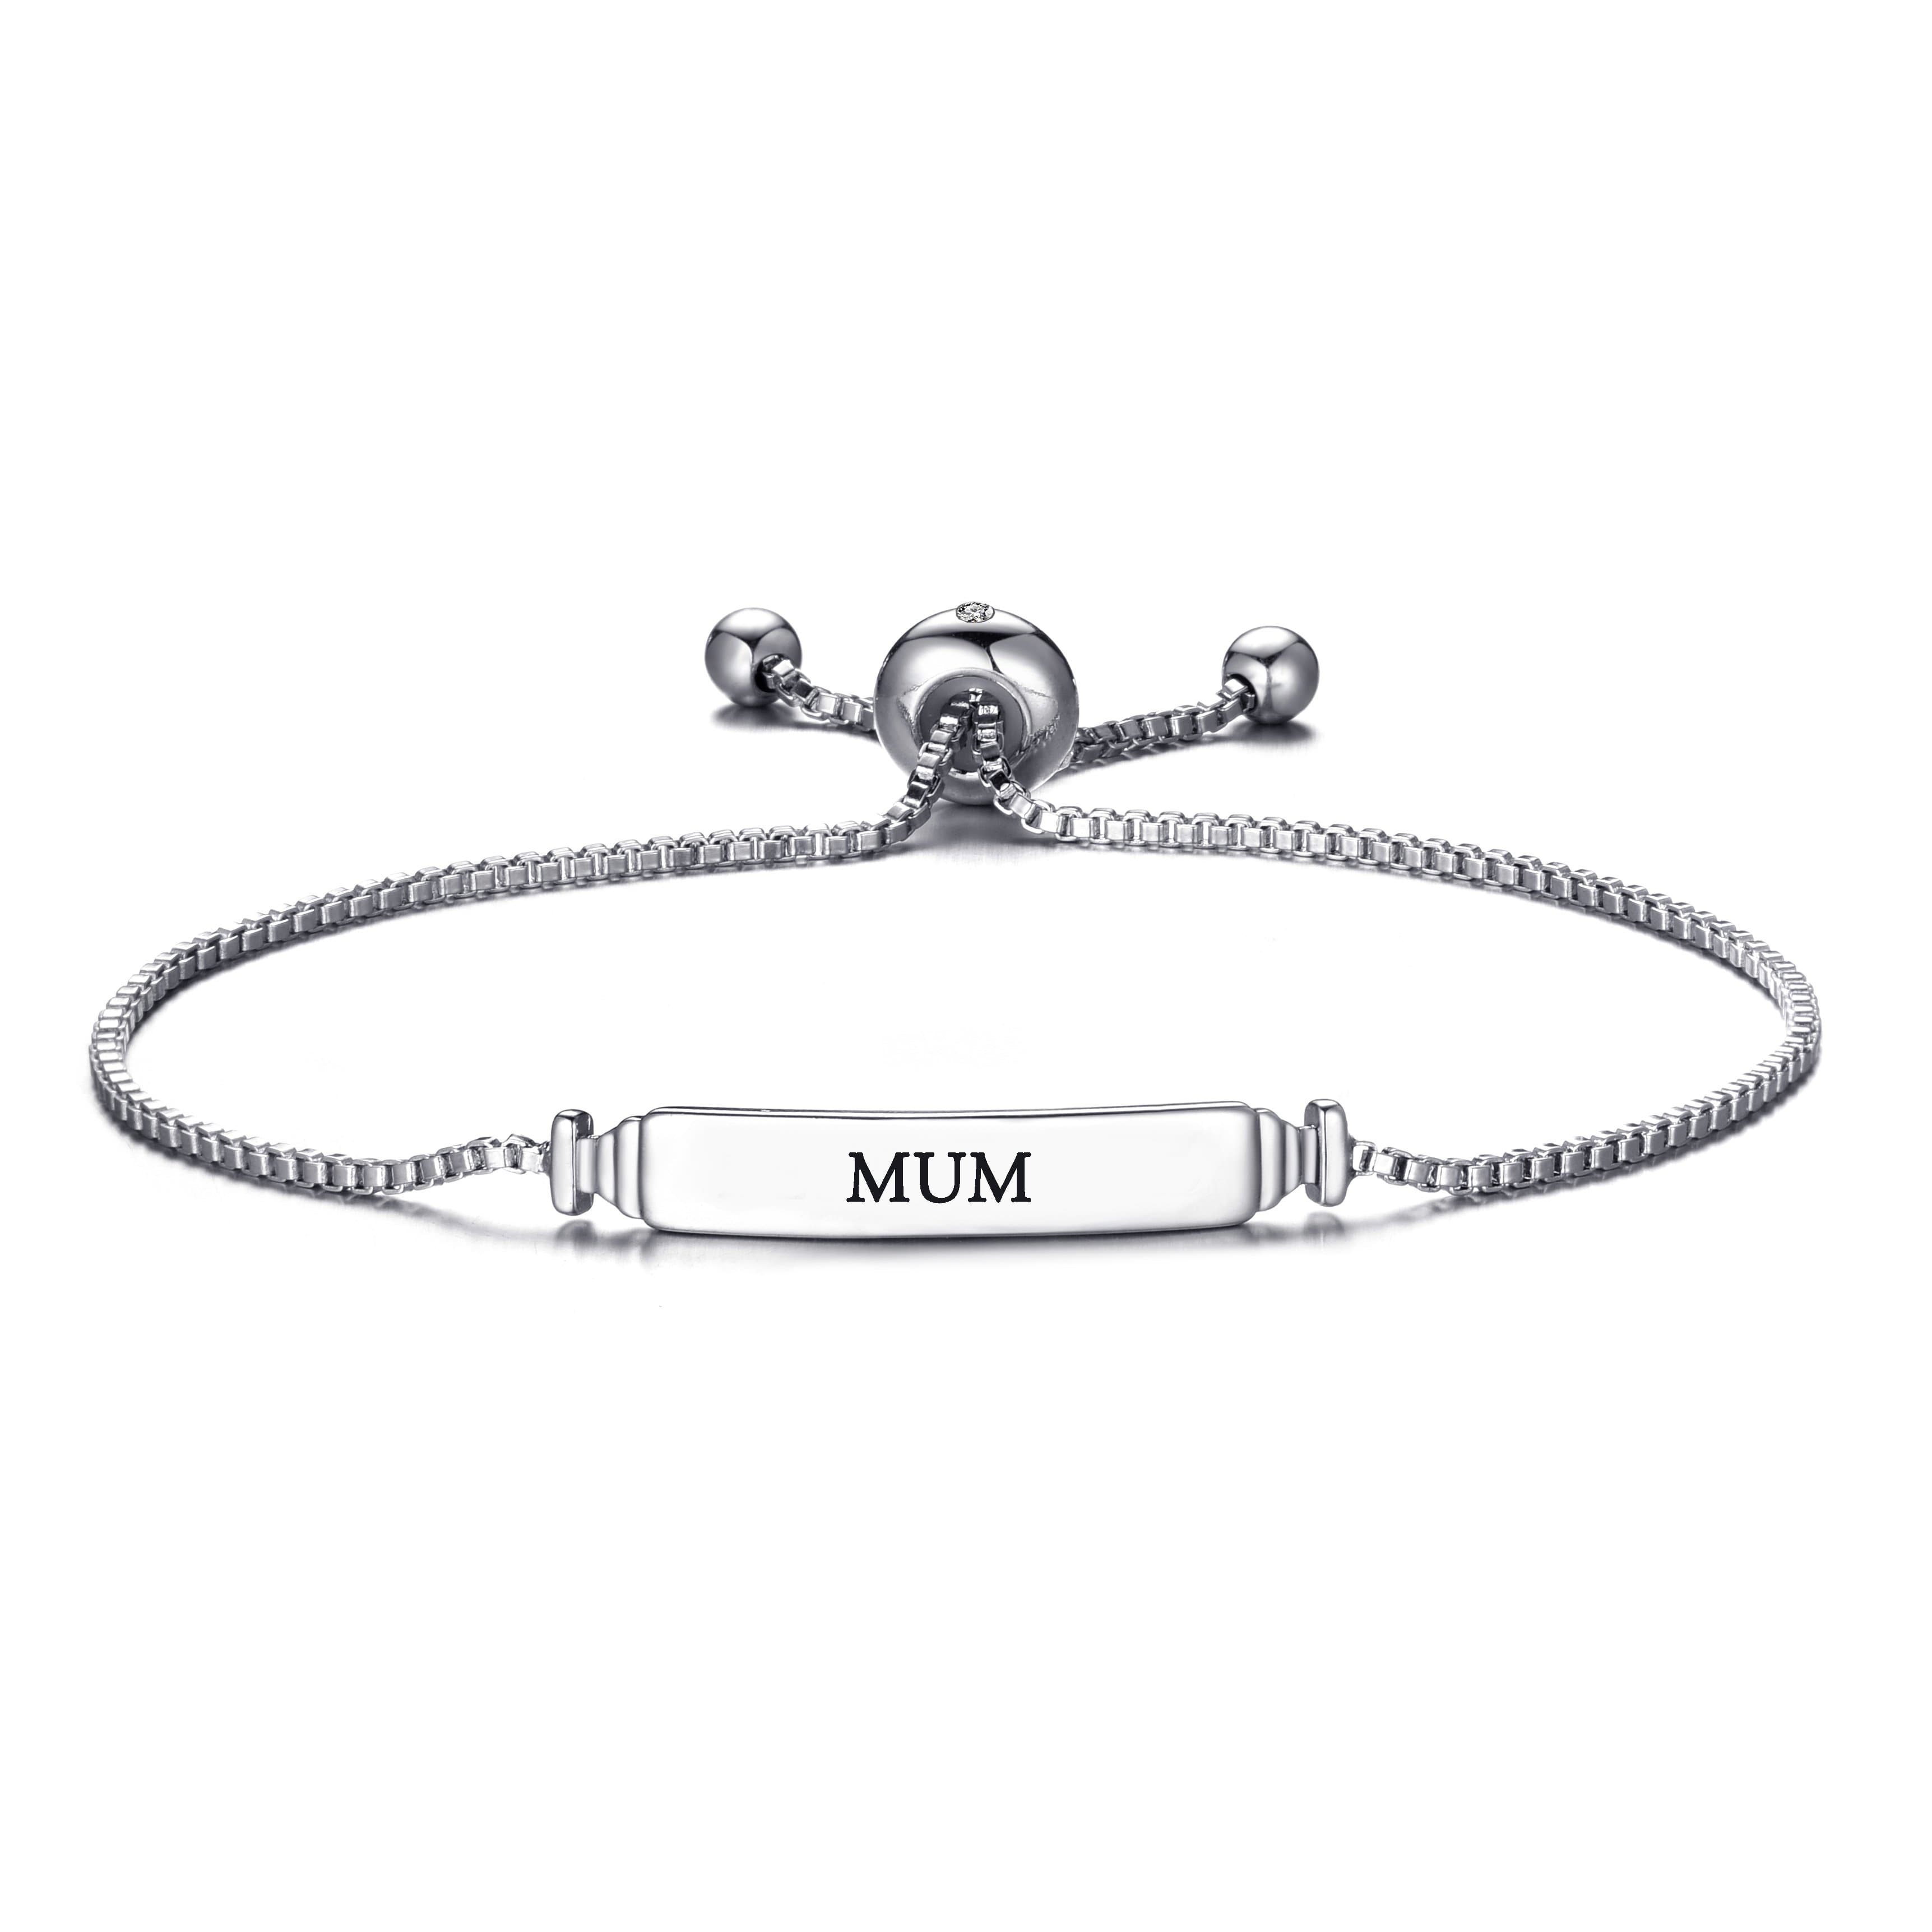 Mum ID Friendship Bracelet Created with Zircondia® Crystals by Philip Jones Jewellery